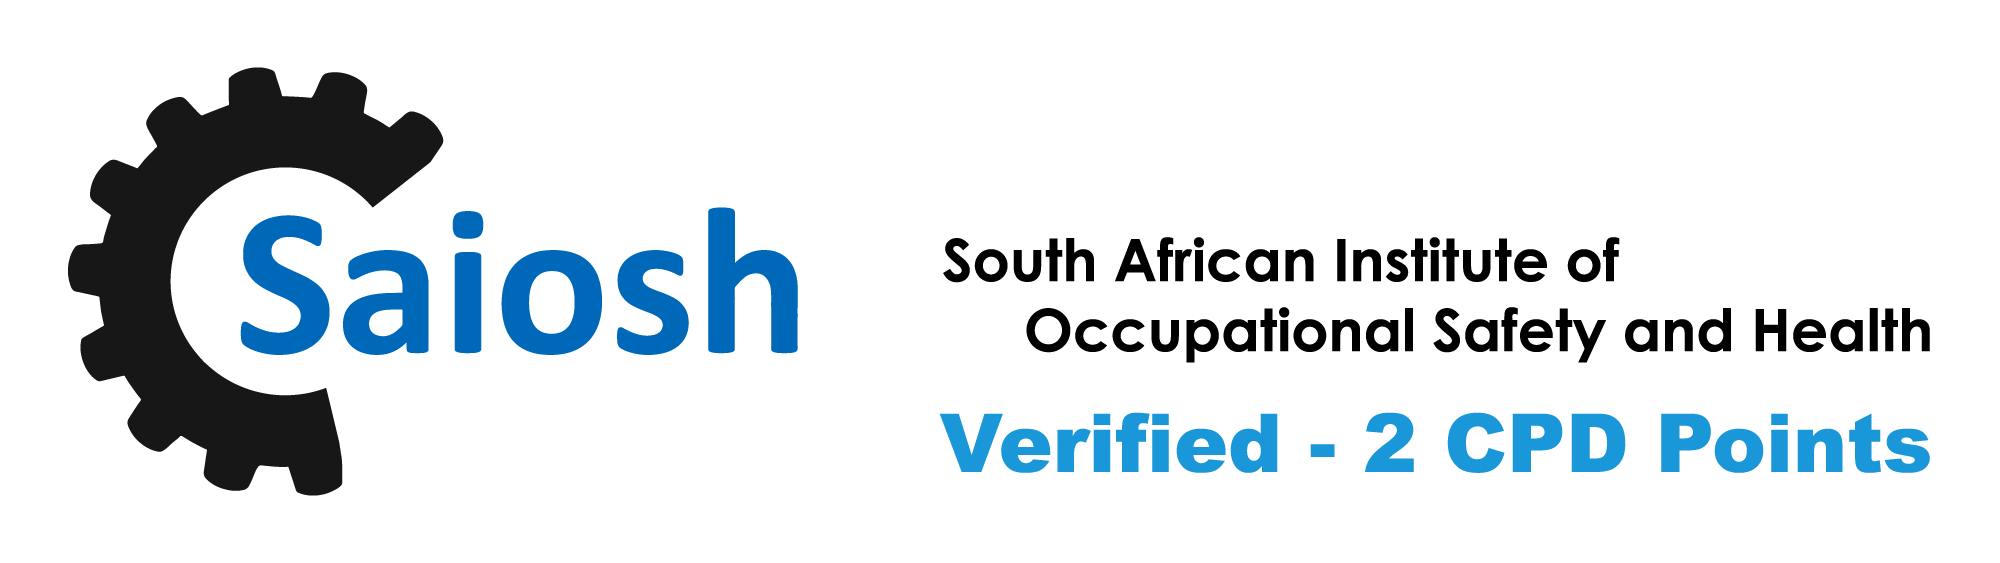 Saiosh_Vector_Logo_Full_All_2021_2CPD_V1-1